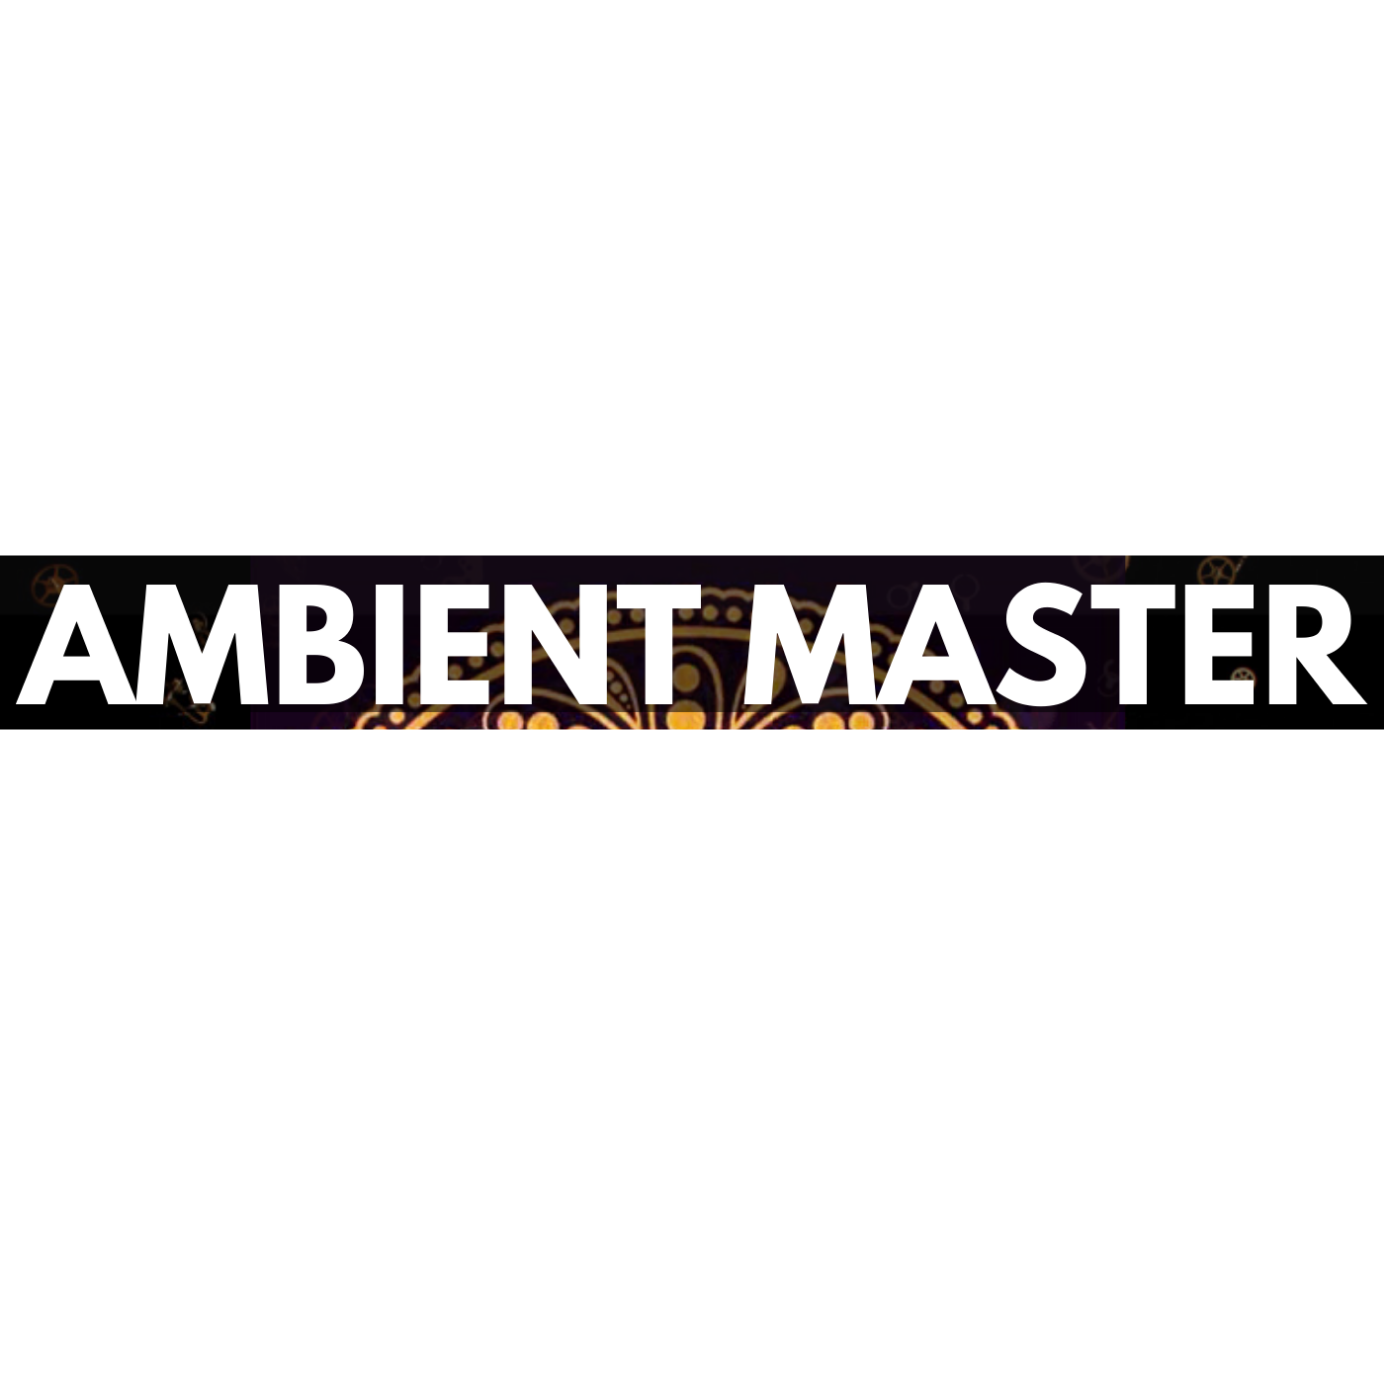 Ambient Master logo